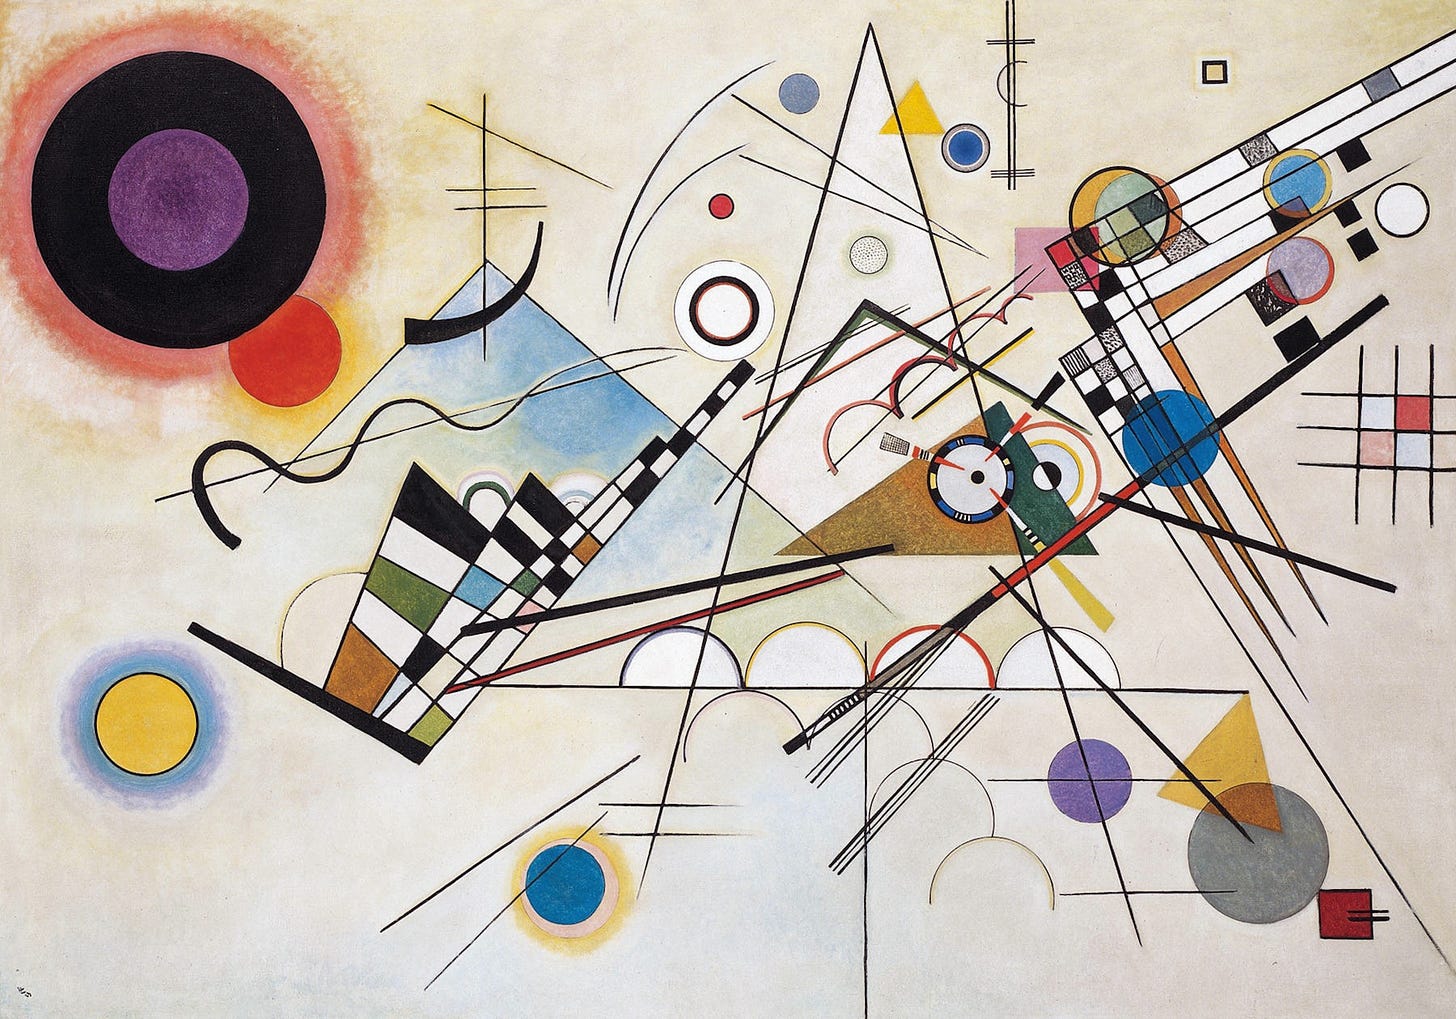 File:Wassily Kandinsky Composition VIII.jpg - Wikimedia Commons